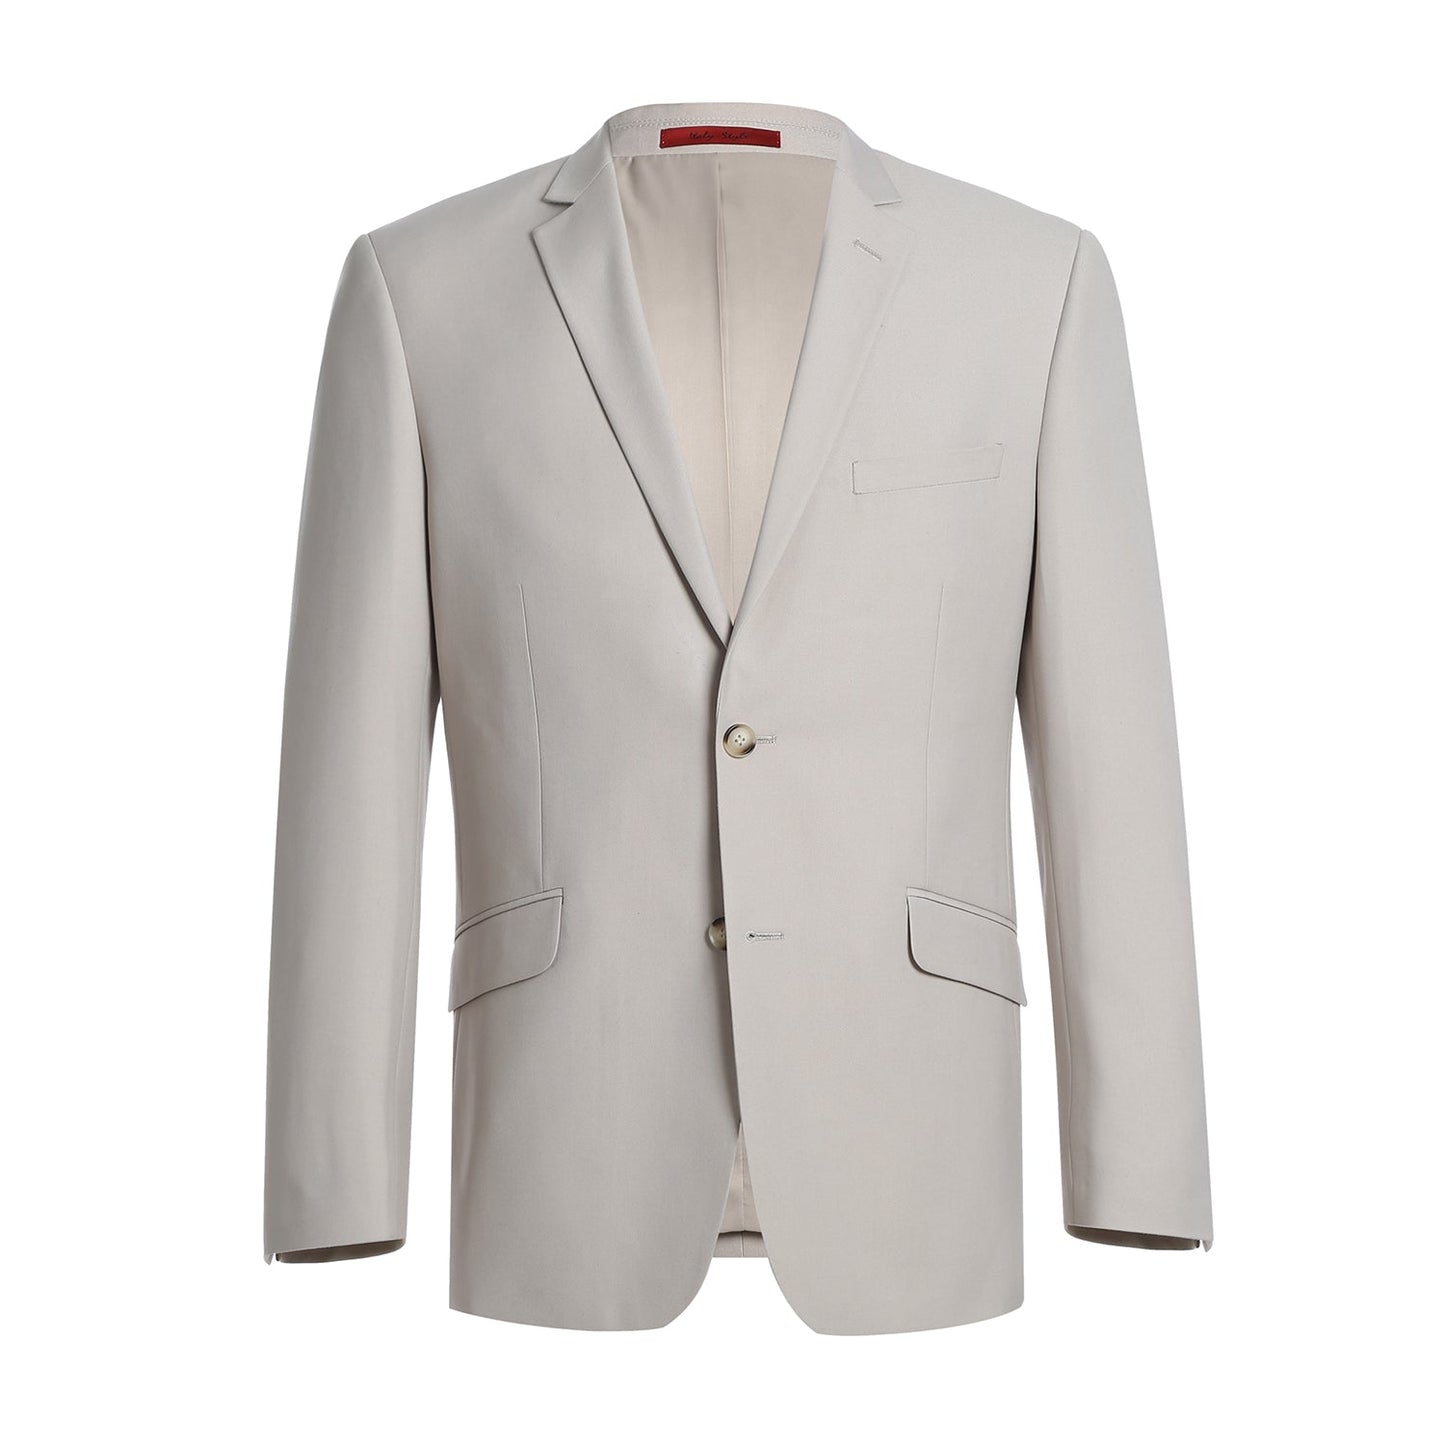 201-84 Men's 2-Piece Single Breasted Beige Notch Lapel Suit